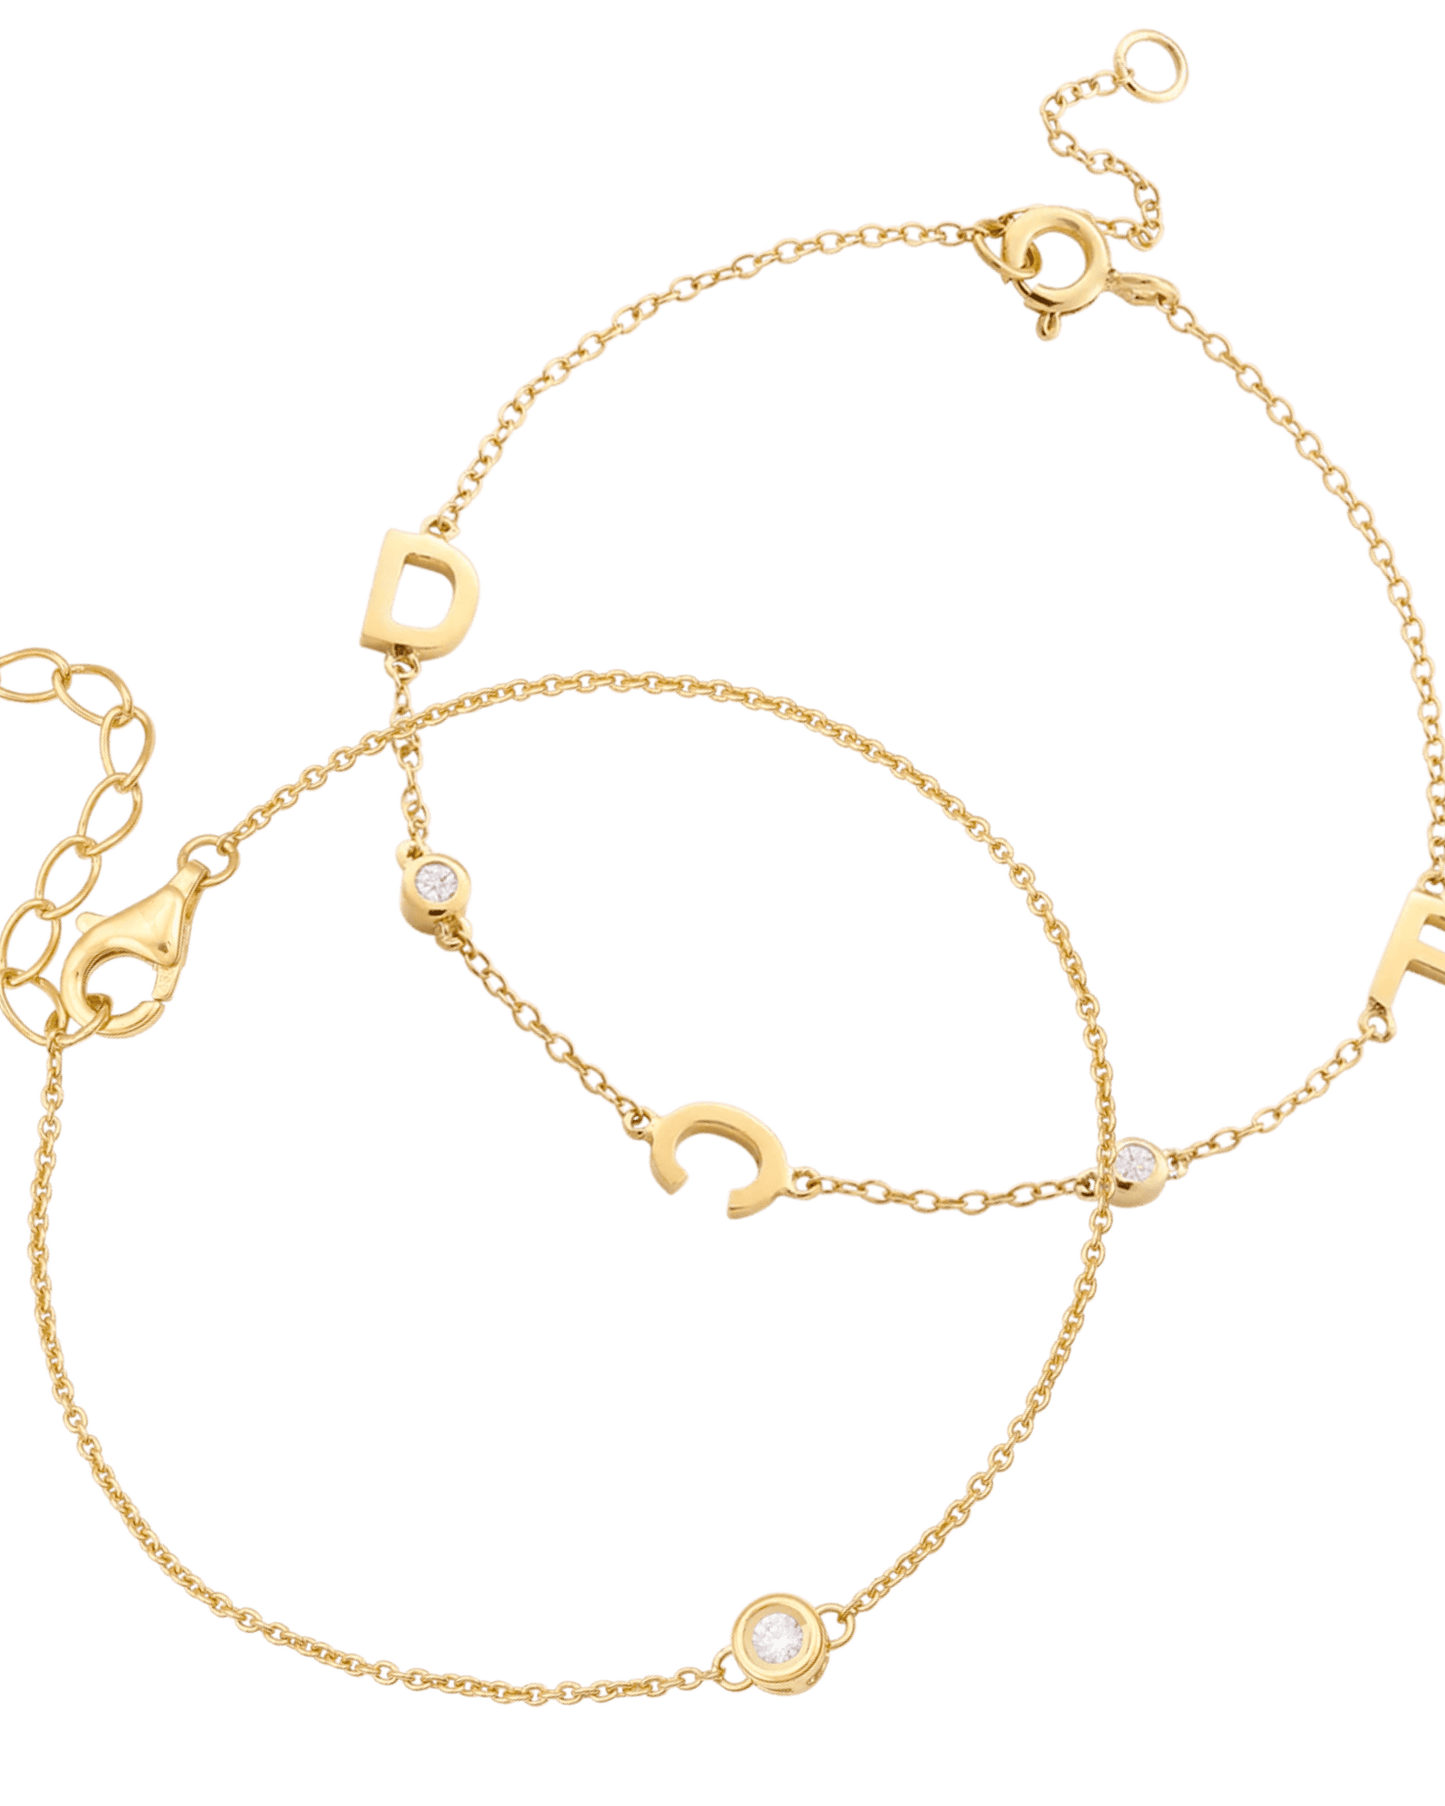 Set of Initial Bracelet with Diamonds & Chain of Love Bracelets - 925 Sterling Silver Bracelets magal-dev 